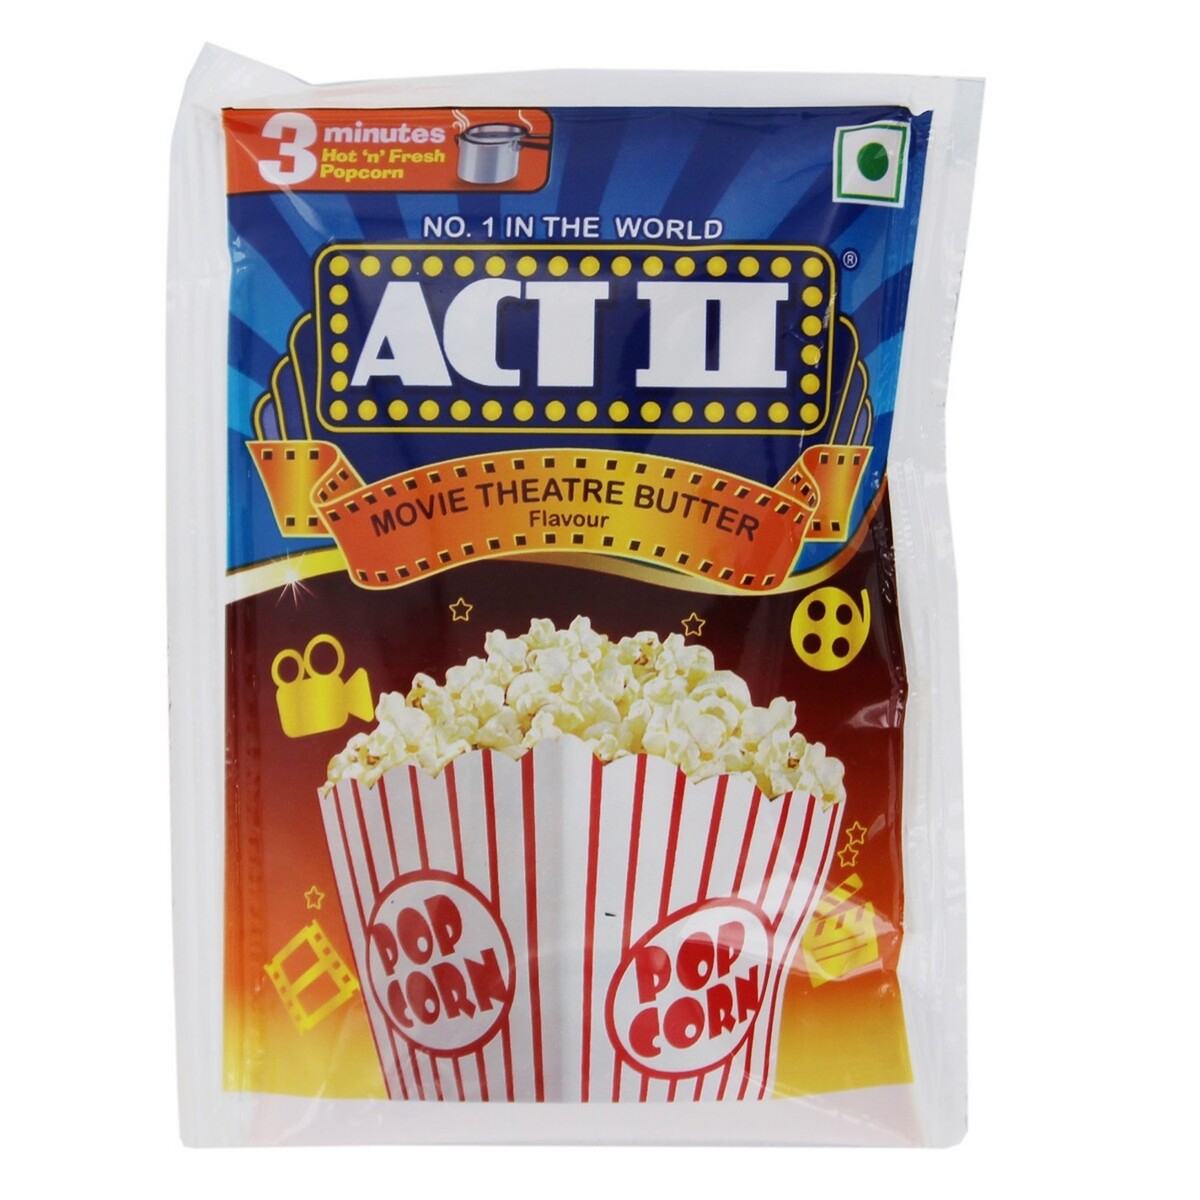 ACT II Popcorn Movie Theatre Butter 70g